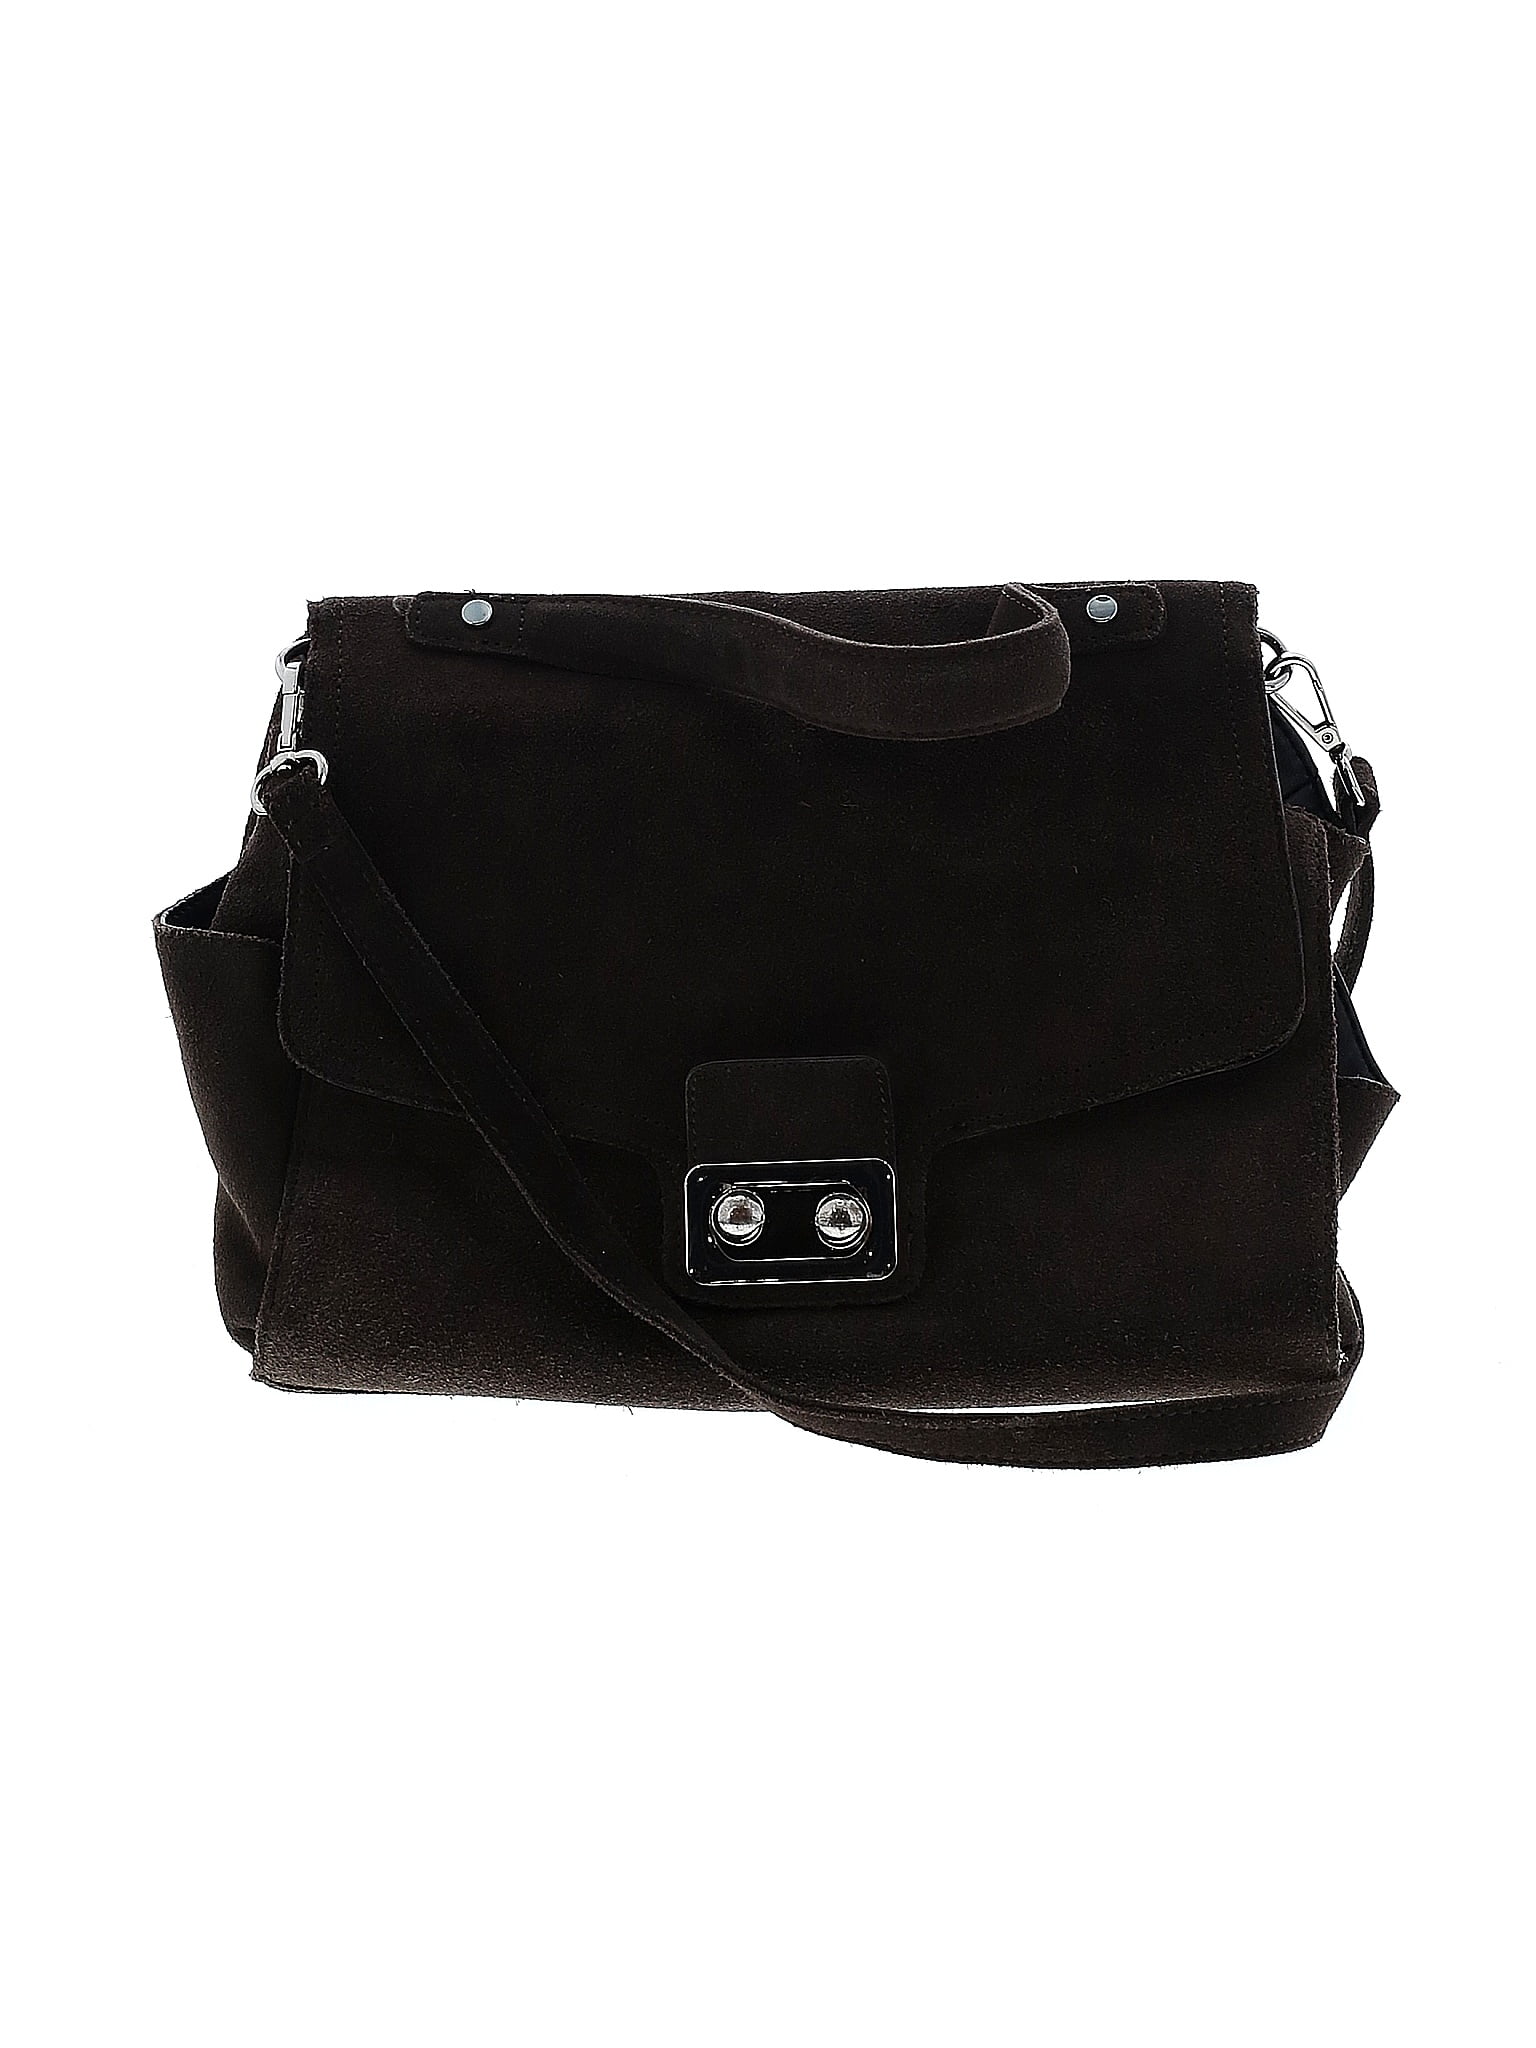 Zara Basic Black Leather Hobo One Size - 68% off | thredUP